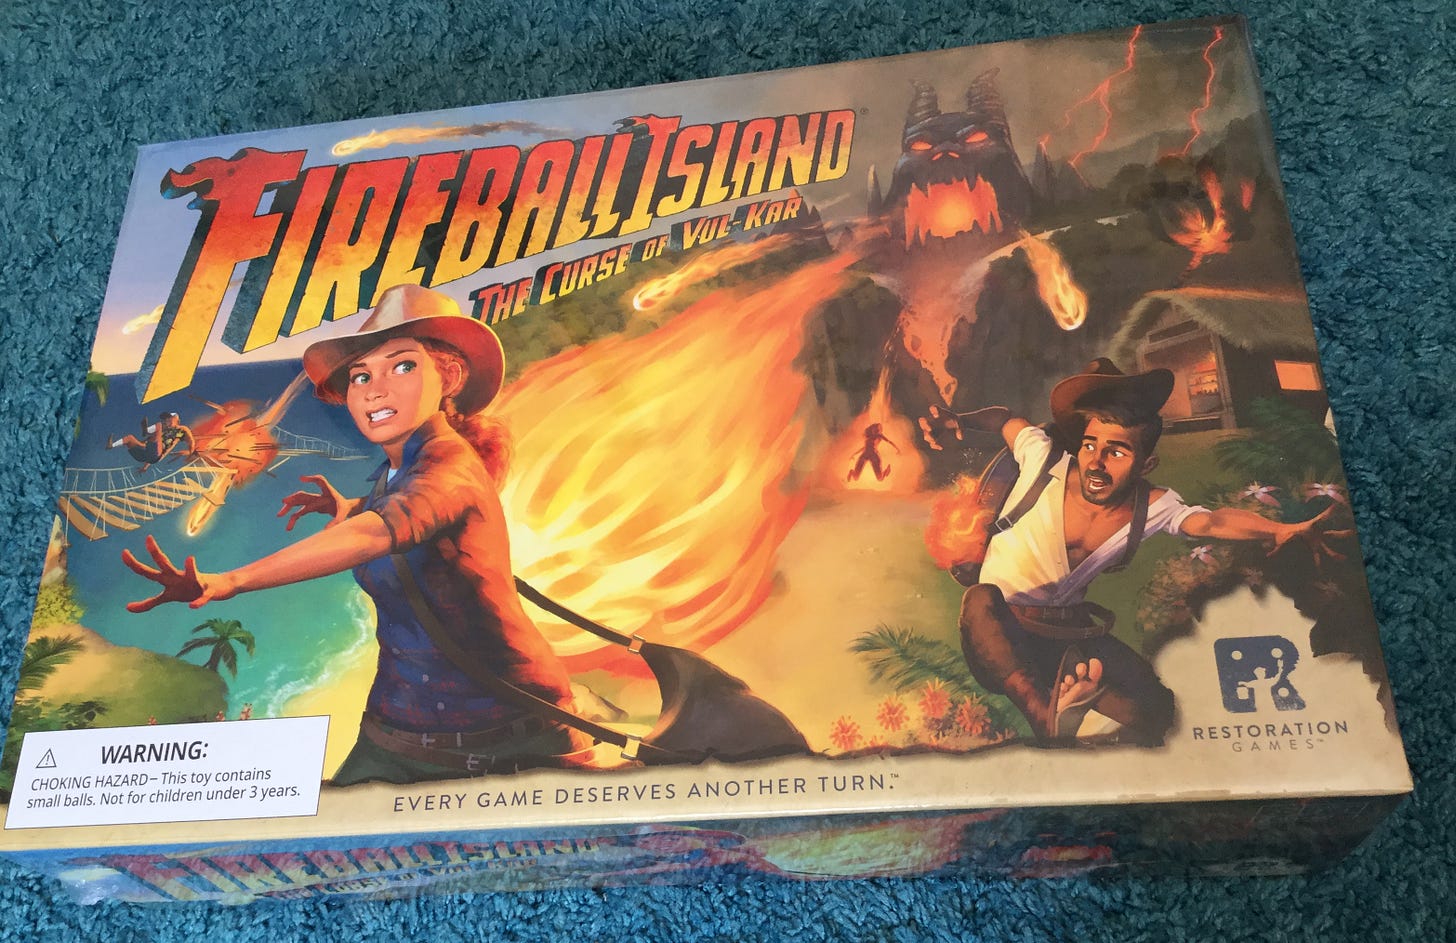 The Fireball Island box, with fireballs shooting at various adventurers